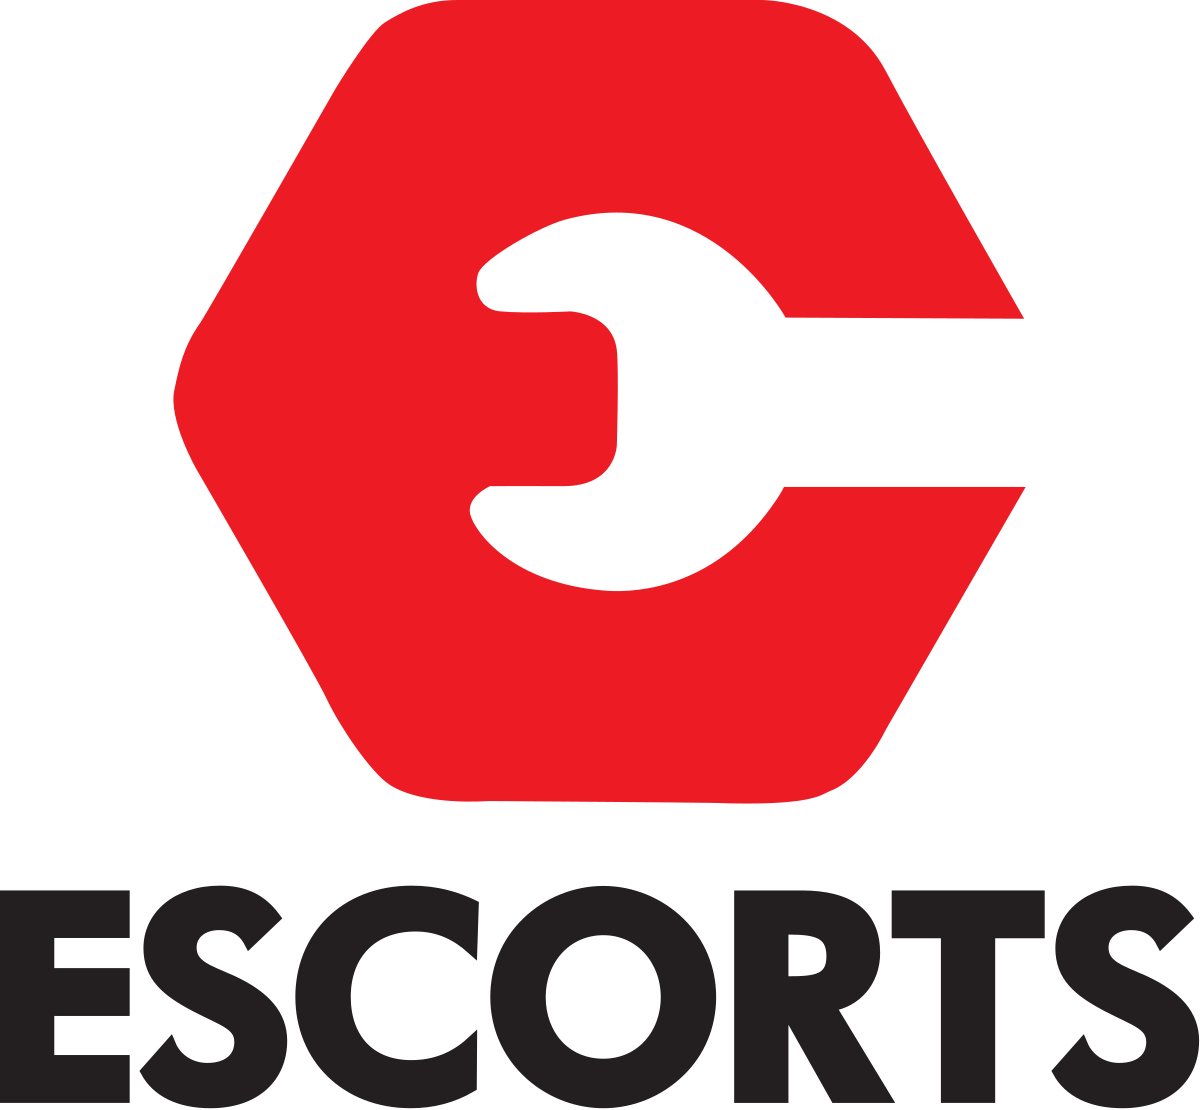 Escorts_Group.svg